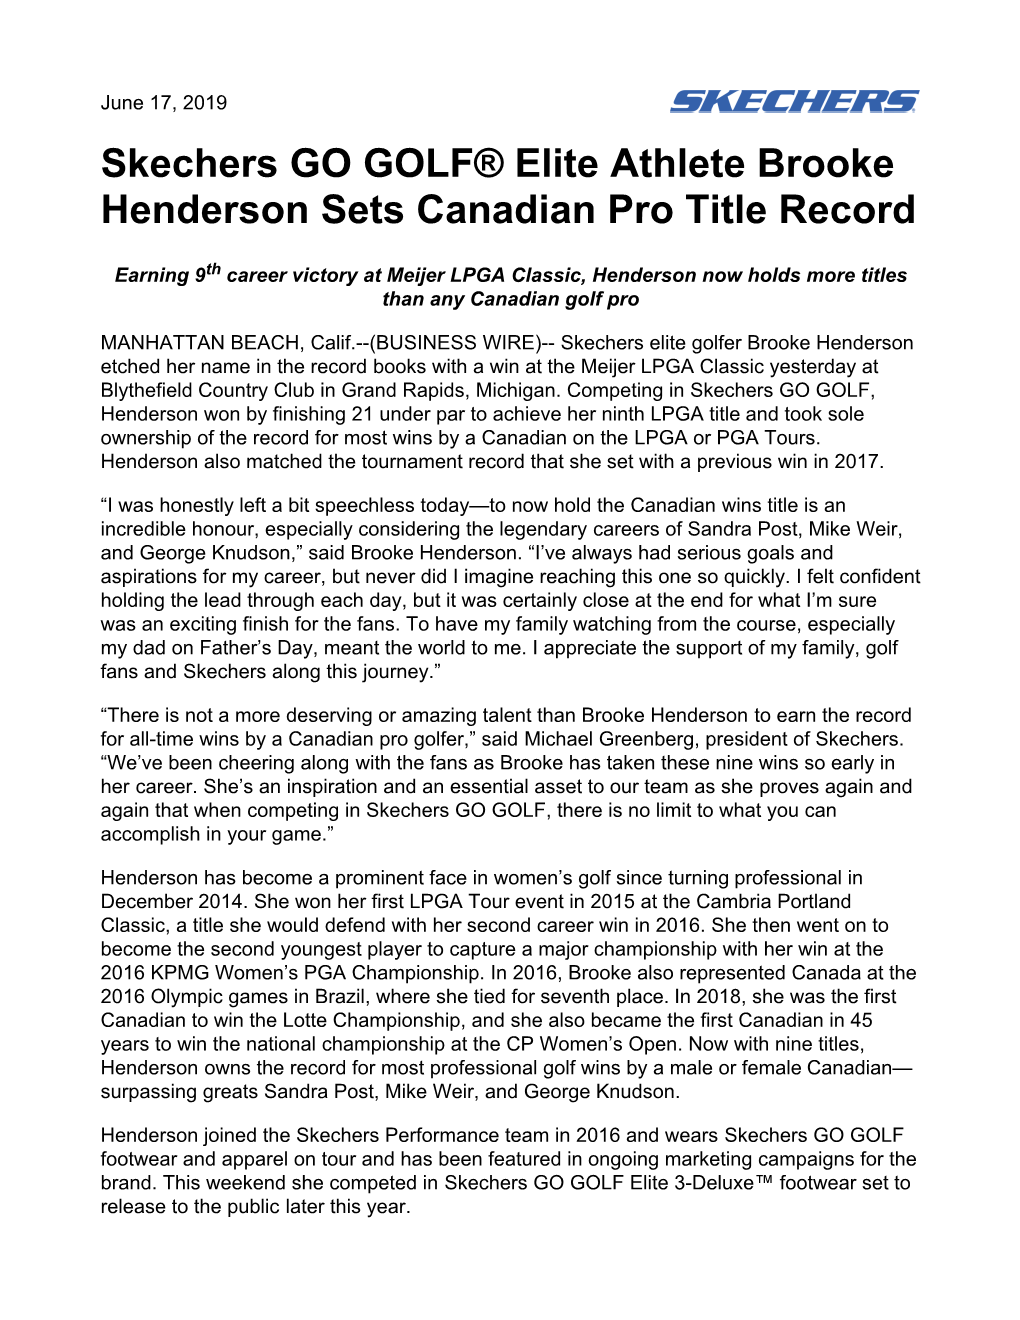 Skechers GO GOLF® Elite Athlete Brooke Henderson Sets Canadian Pro Title Record